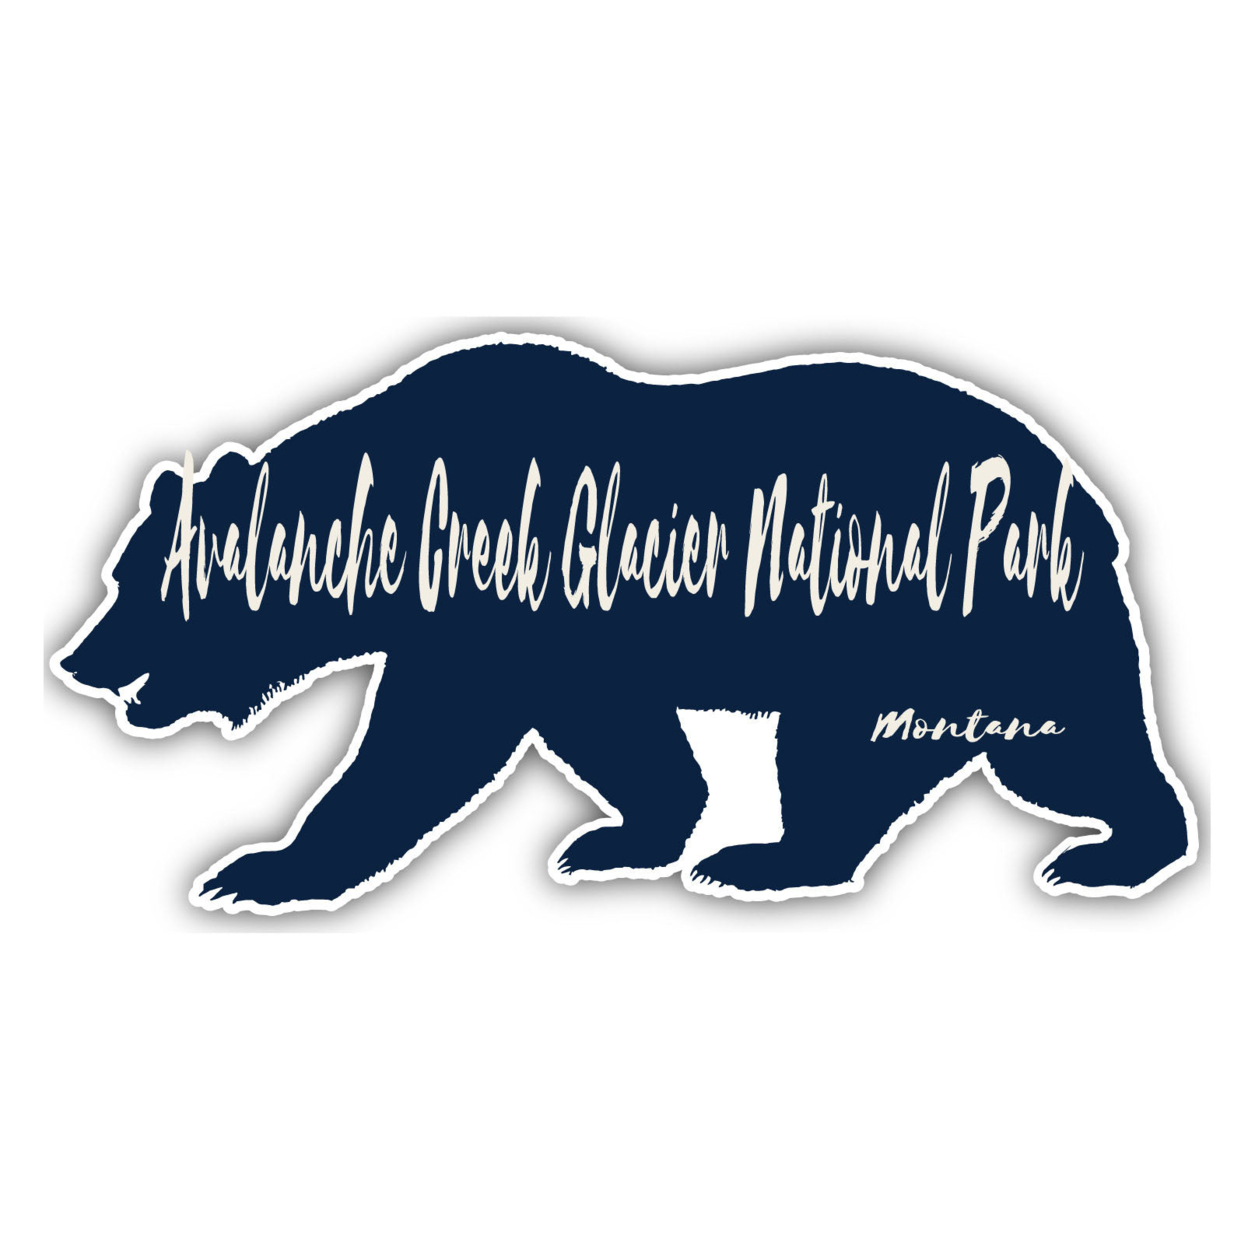 Avalanche Creek Glacier National Park Montana Souvenir Decorative Stickers (Choose Theme And Size) - Single Unit, 2-Inch, Bear